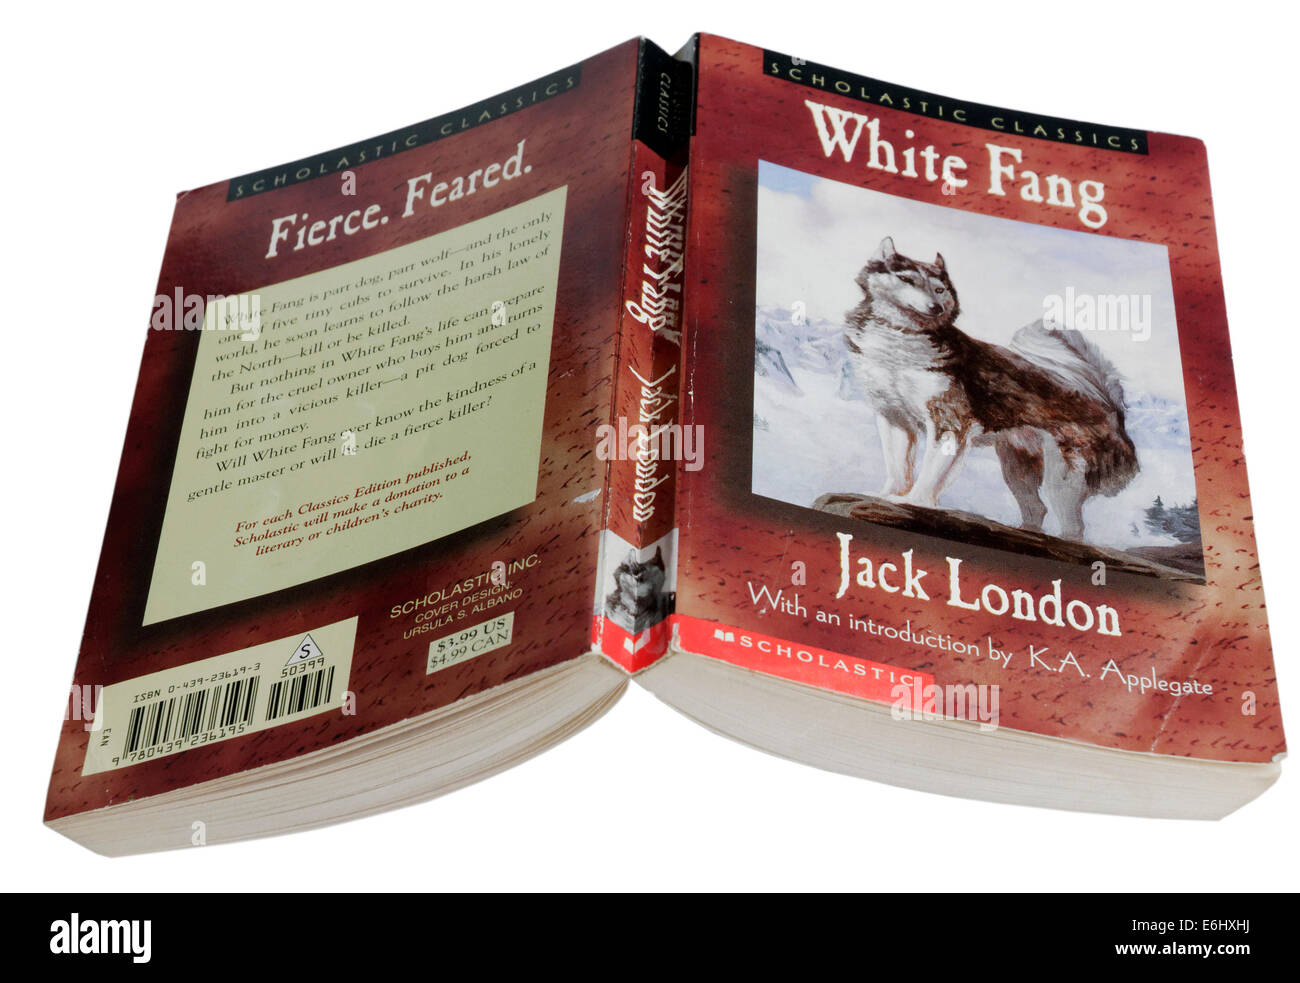 white fang ebook